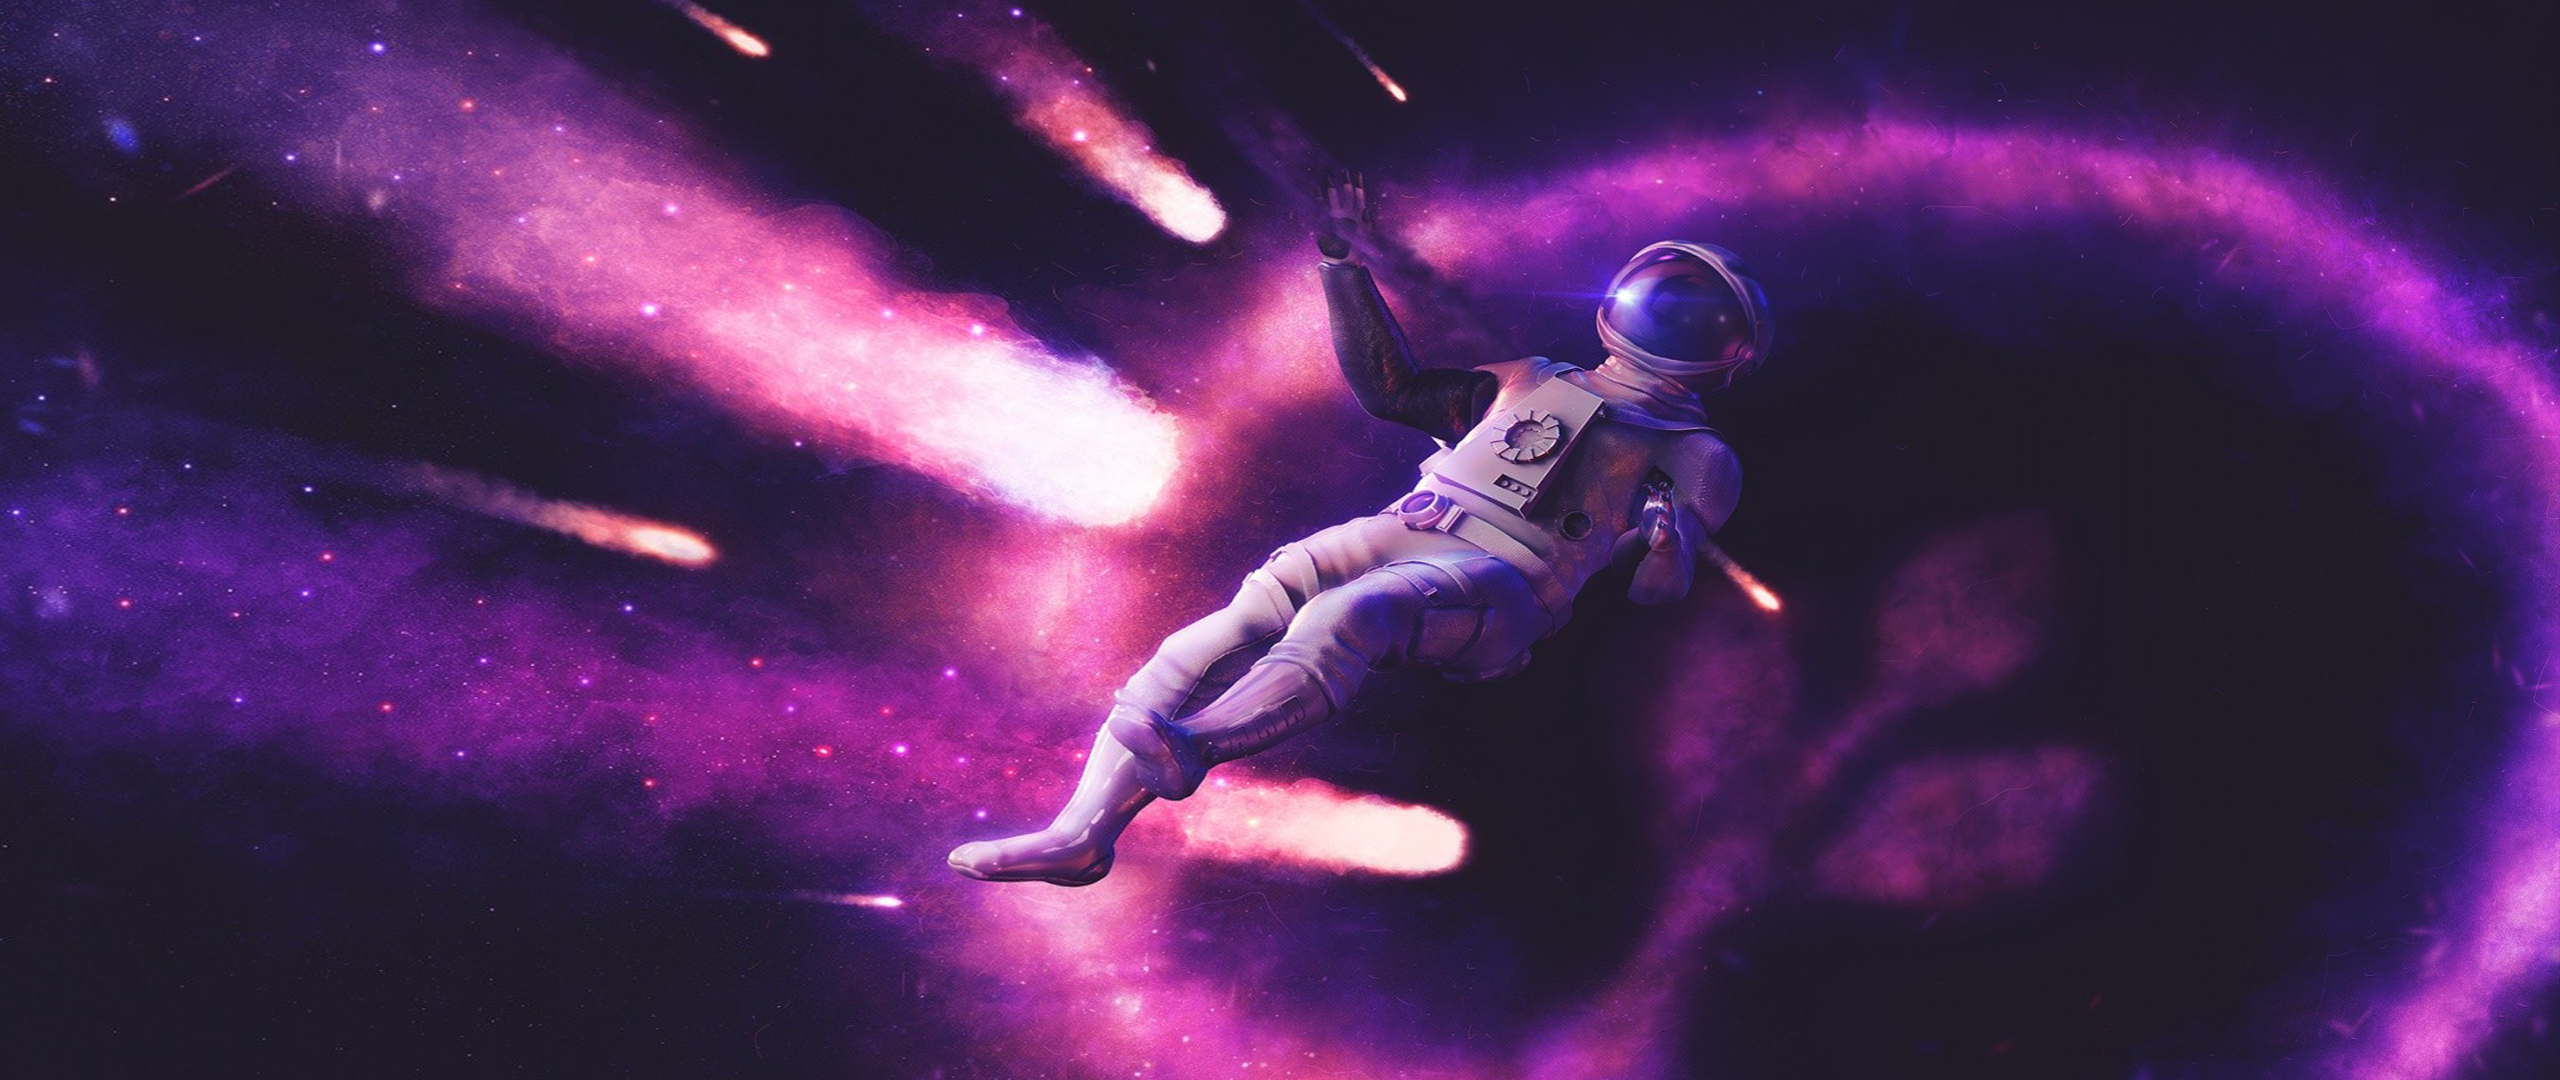 General 2560x1080 ultrawide space astronaut space art science fiction Desktopography